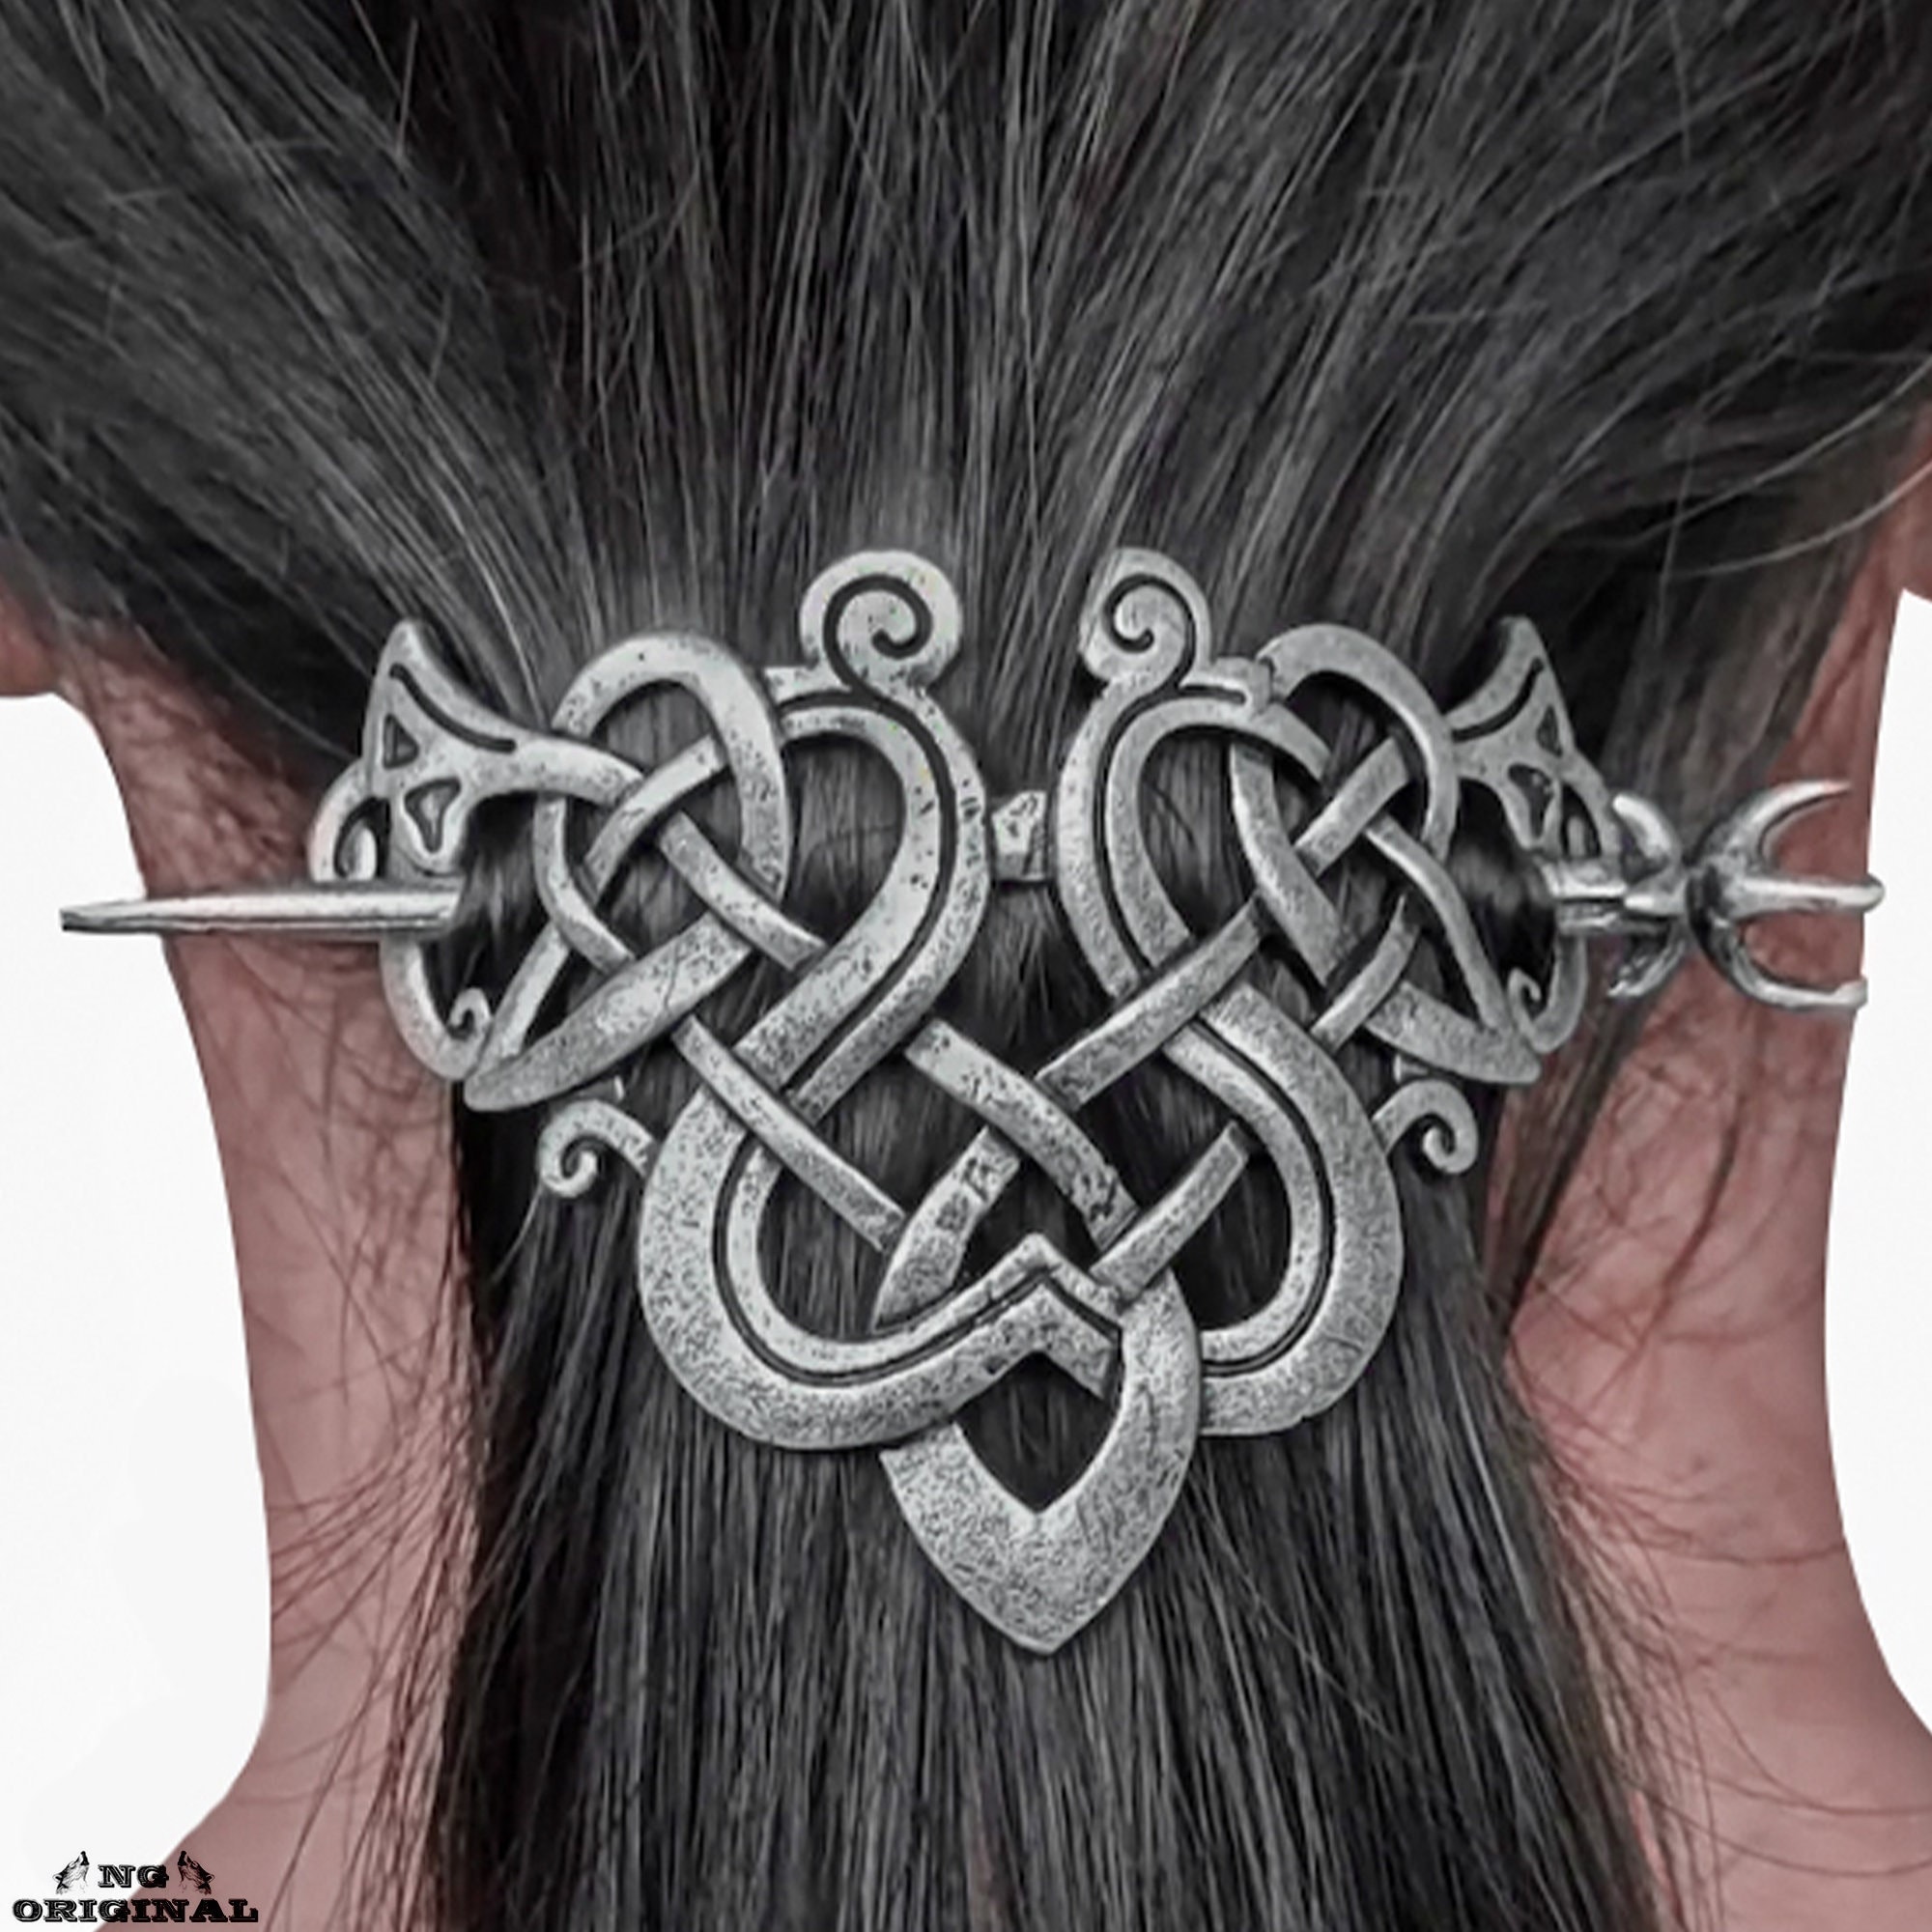 Nanogram hair accessory